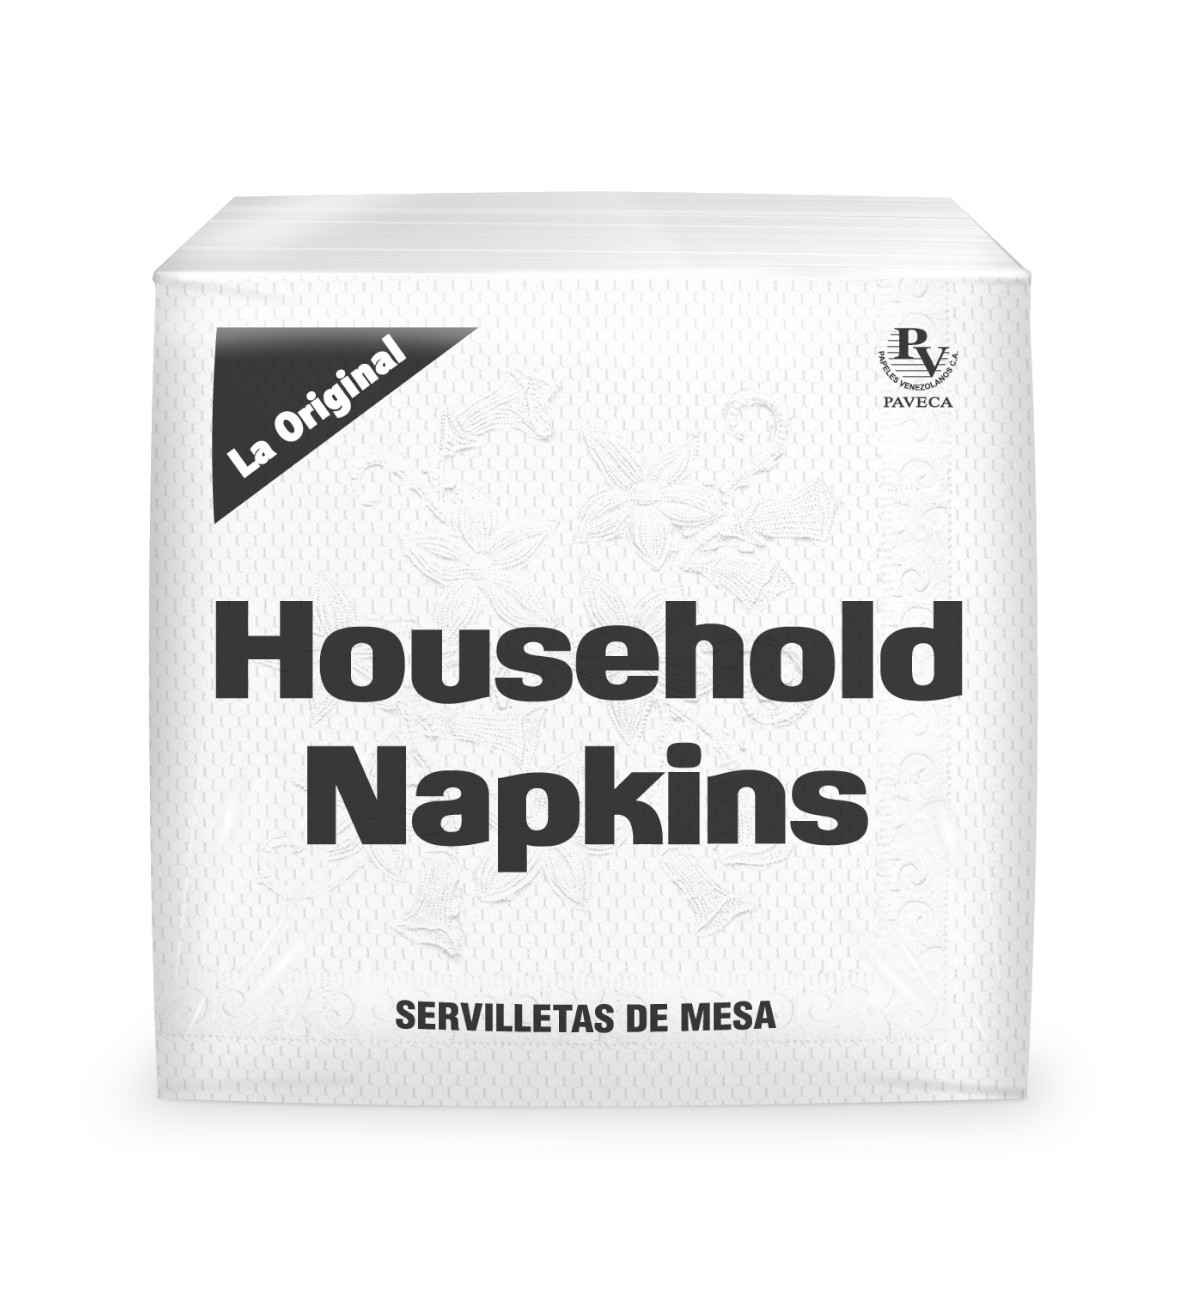 Servilleta de Mesa Household Napkins x 120